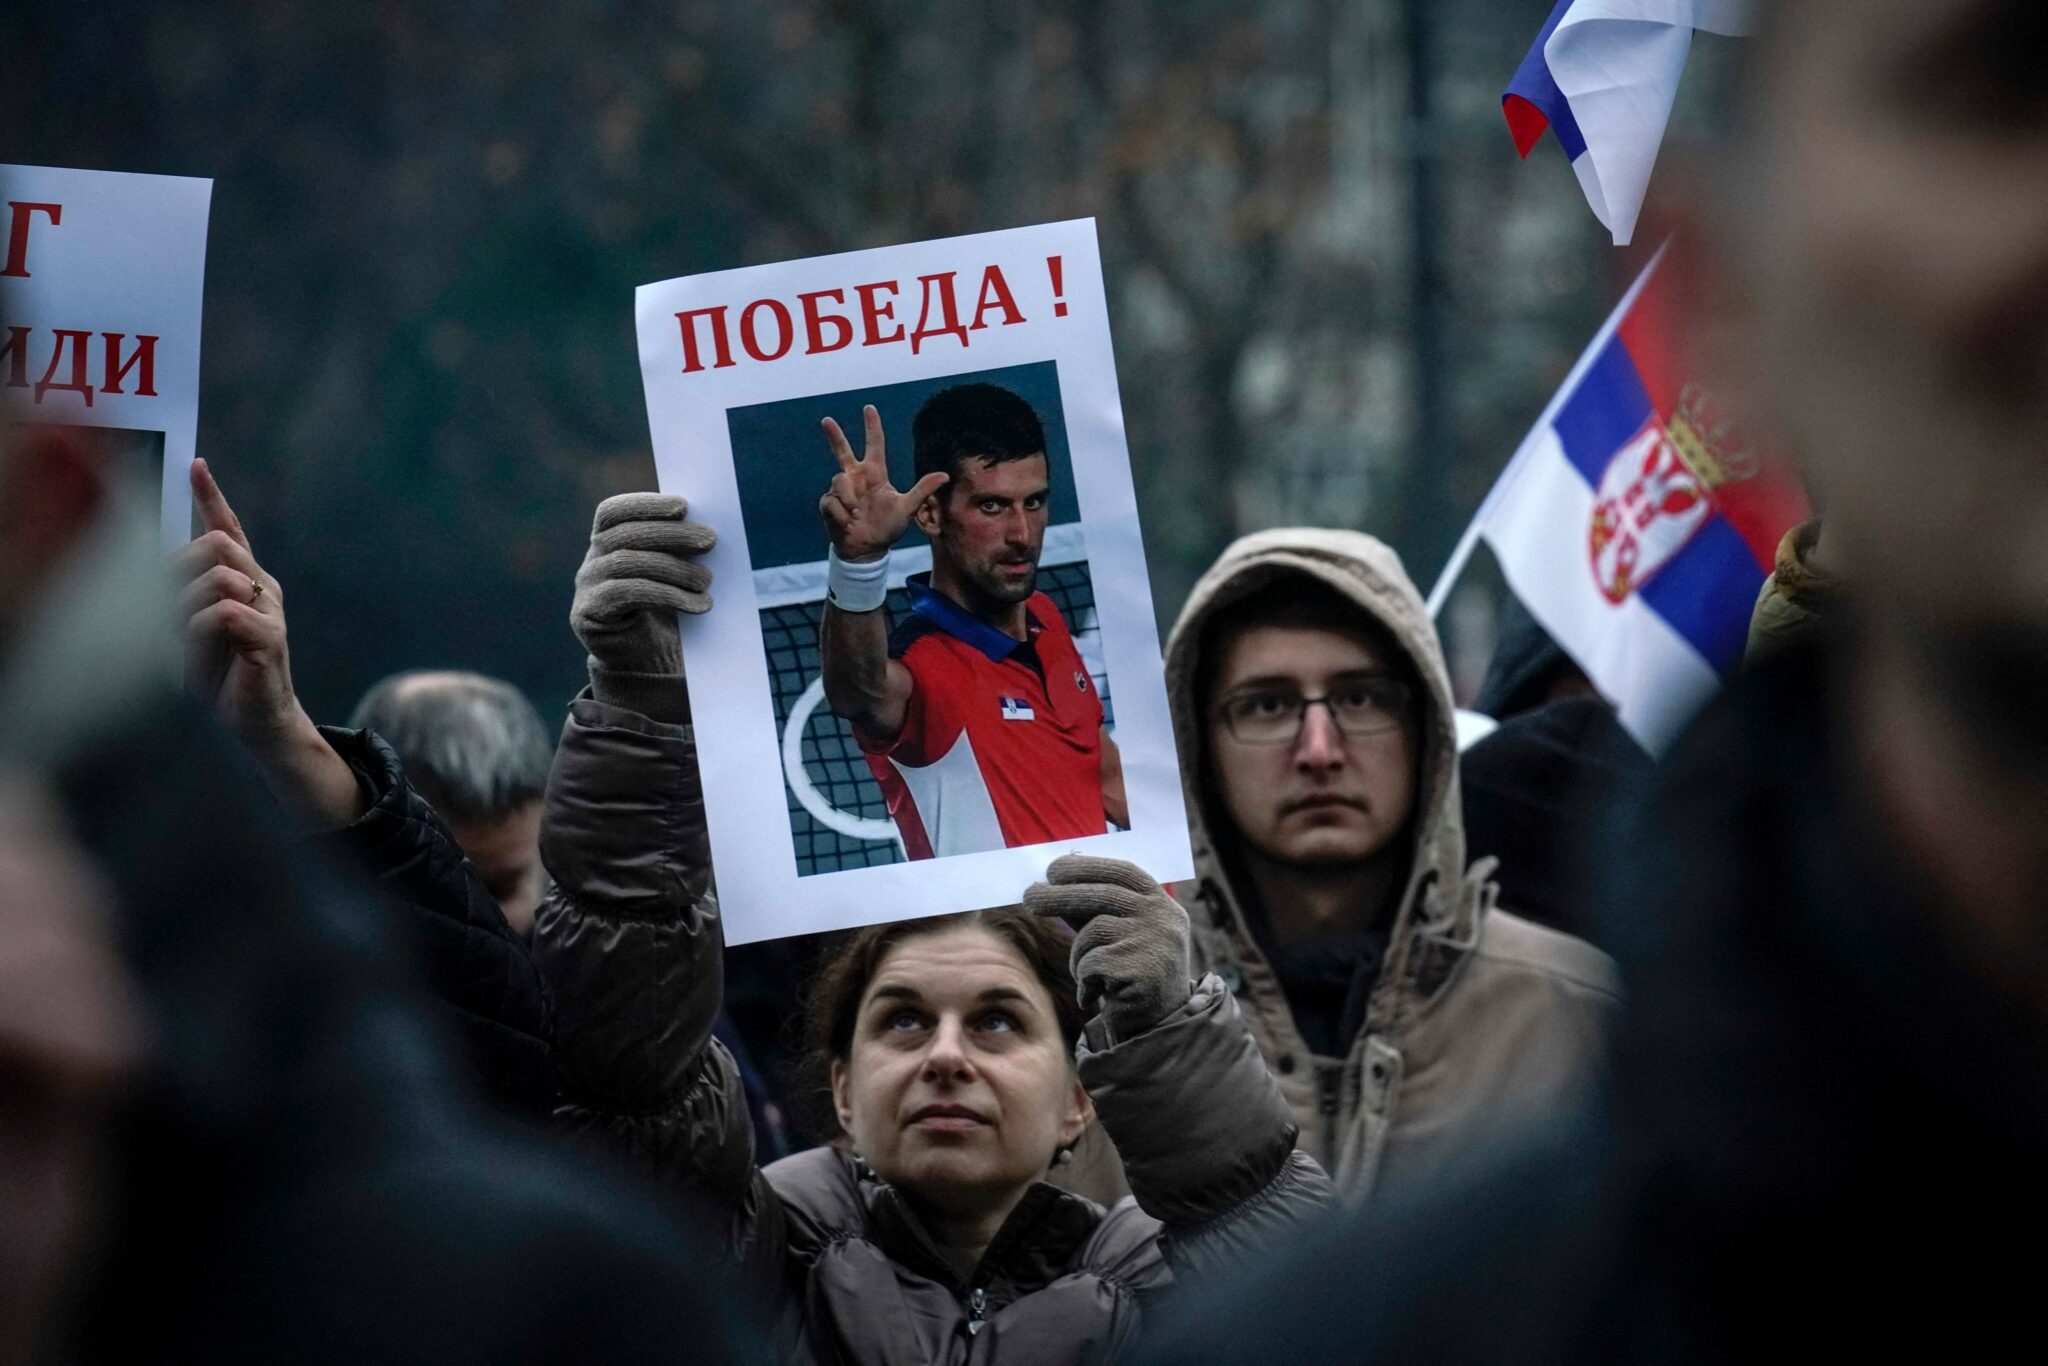 Плакат в поддержку Новака Джоковича в Белграде. Фото OLIVER BUNIC / TASS / Scanpix / Leta